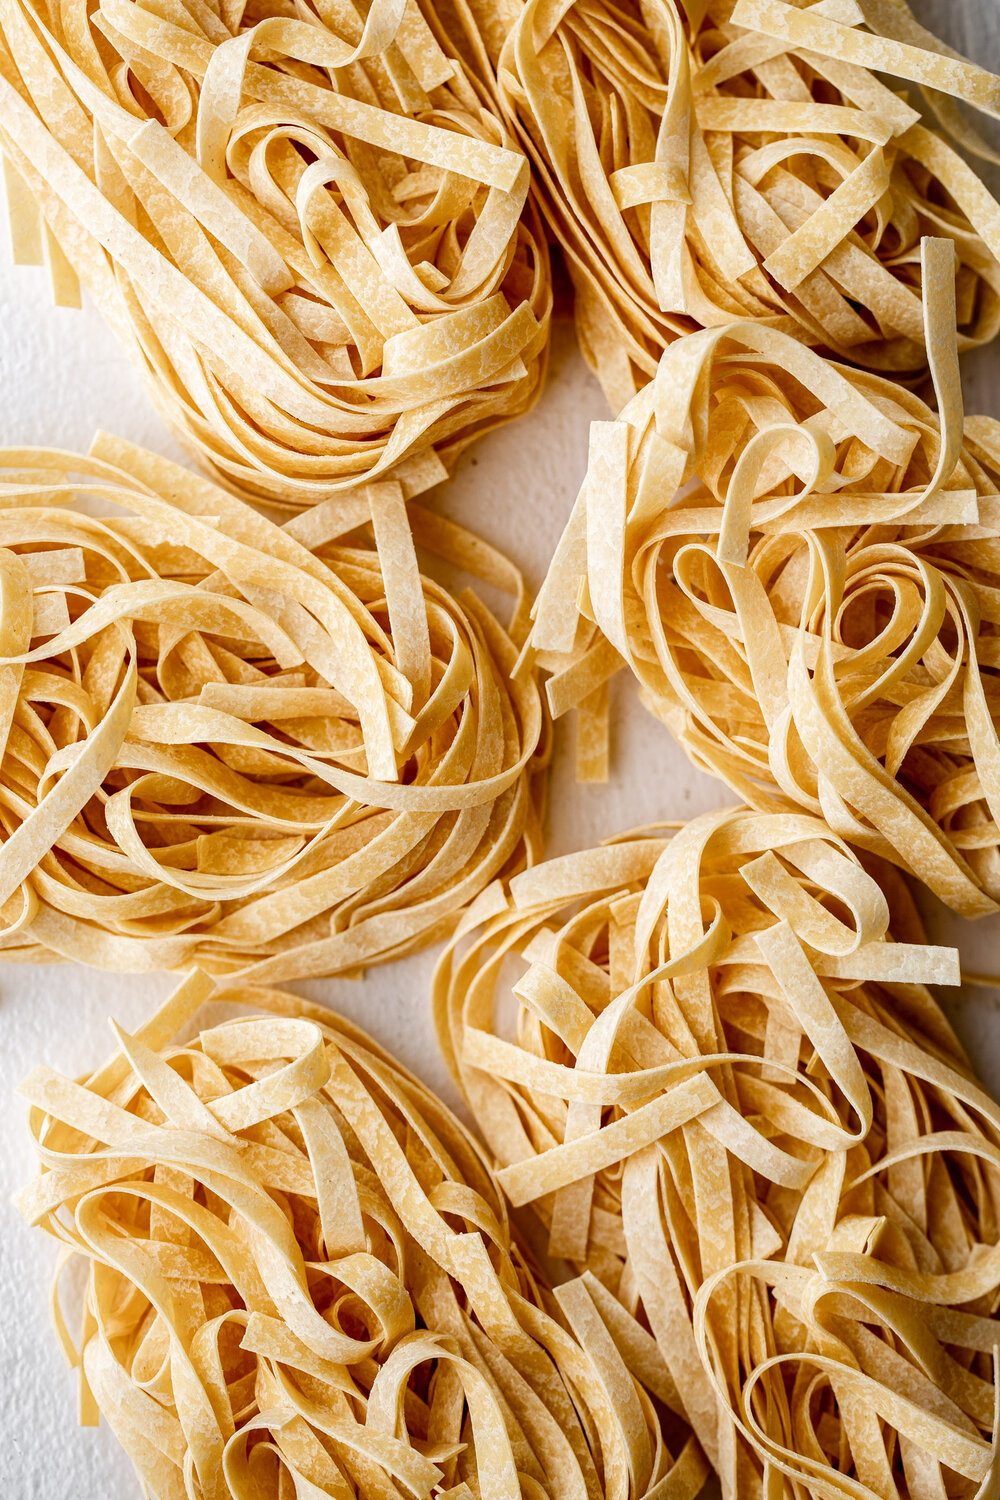 nests of tagliatelle pasta